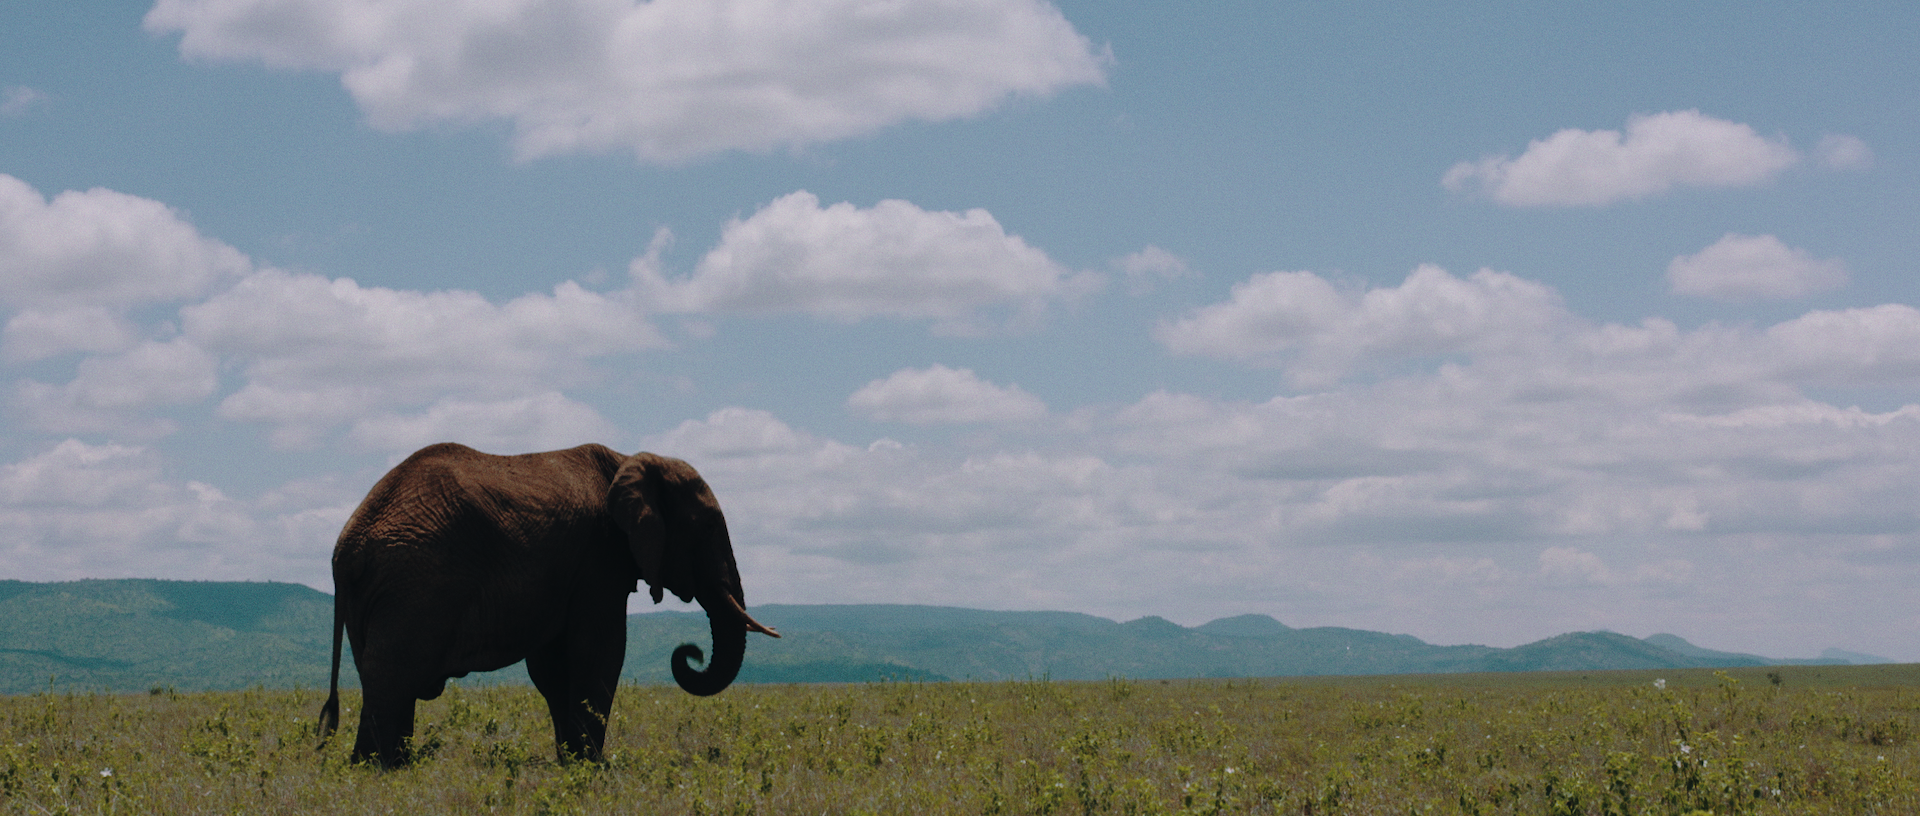 BBC Earth – Elephant 1.png